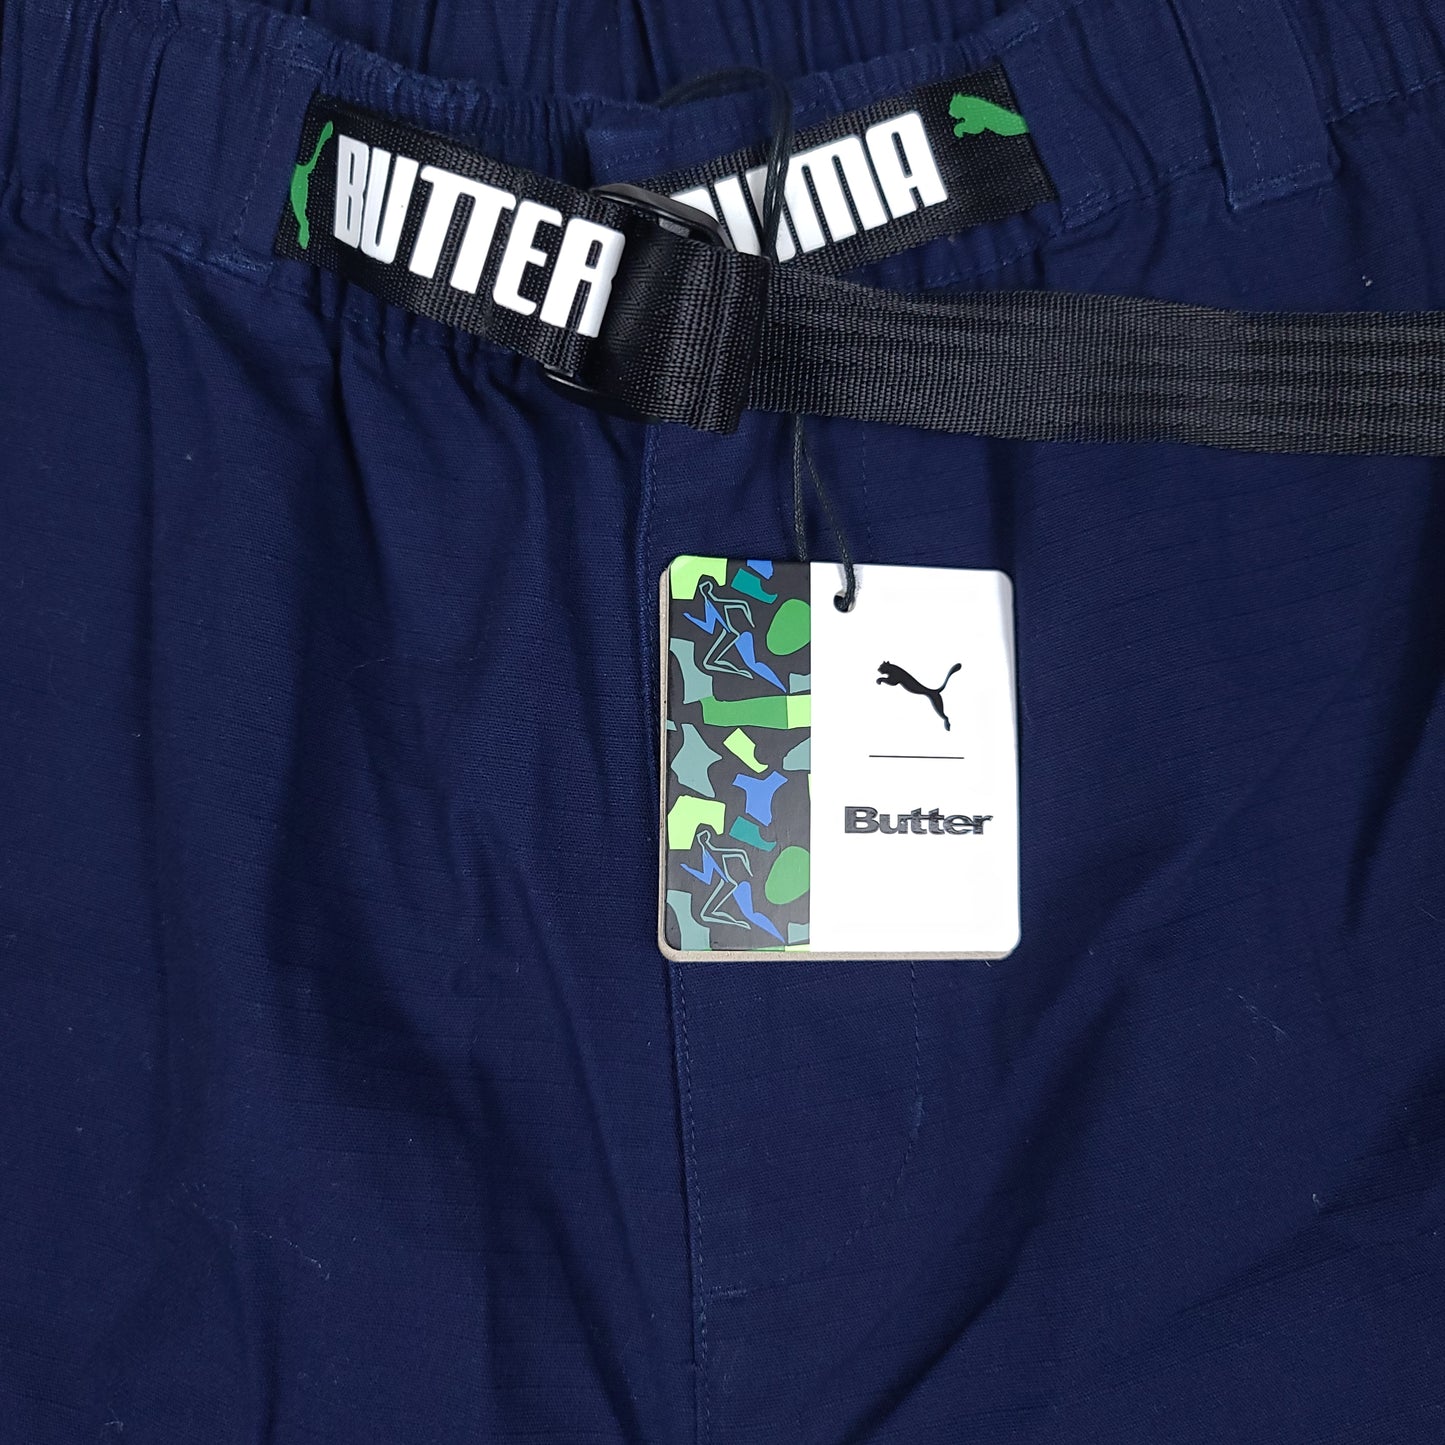 Puma x Butter Navy Blue Nylon Shorts